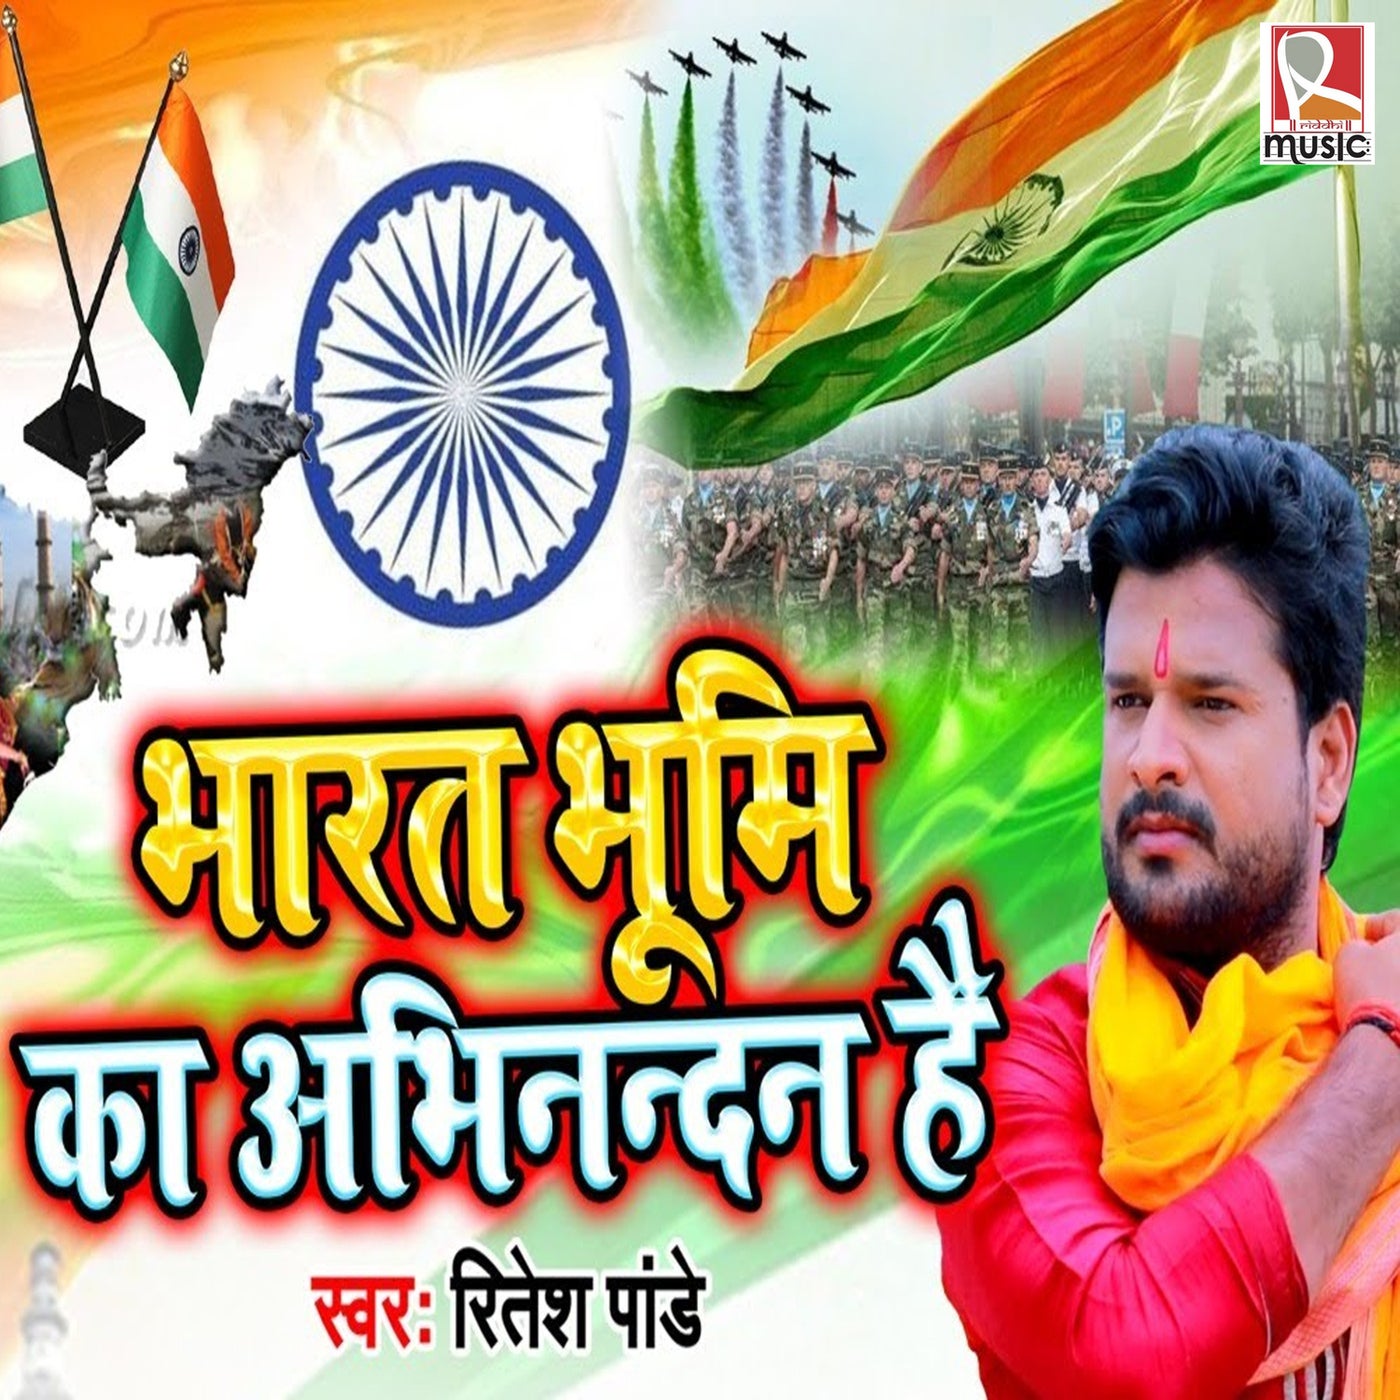 India desh bhakti editing background image download